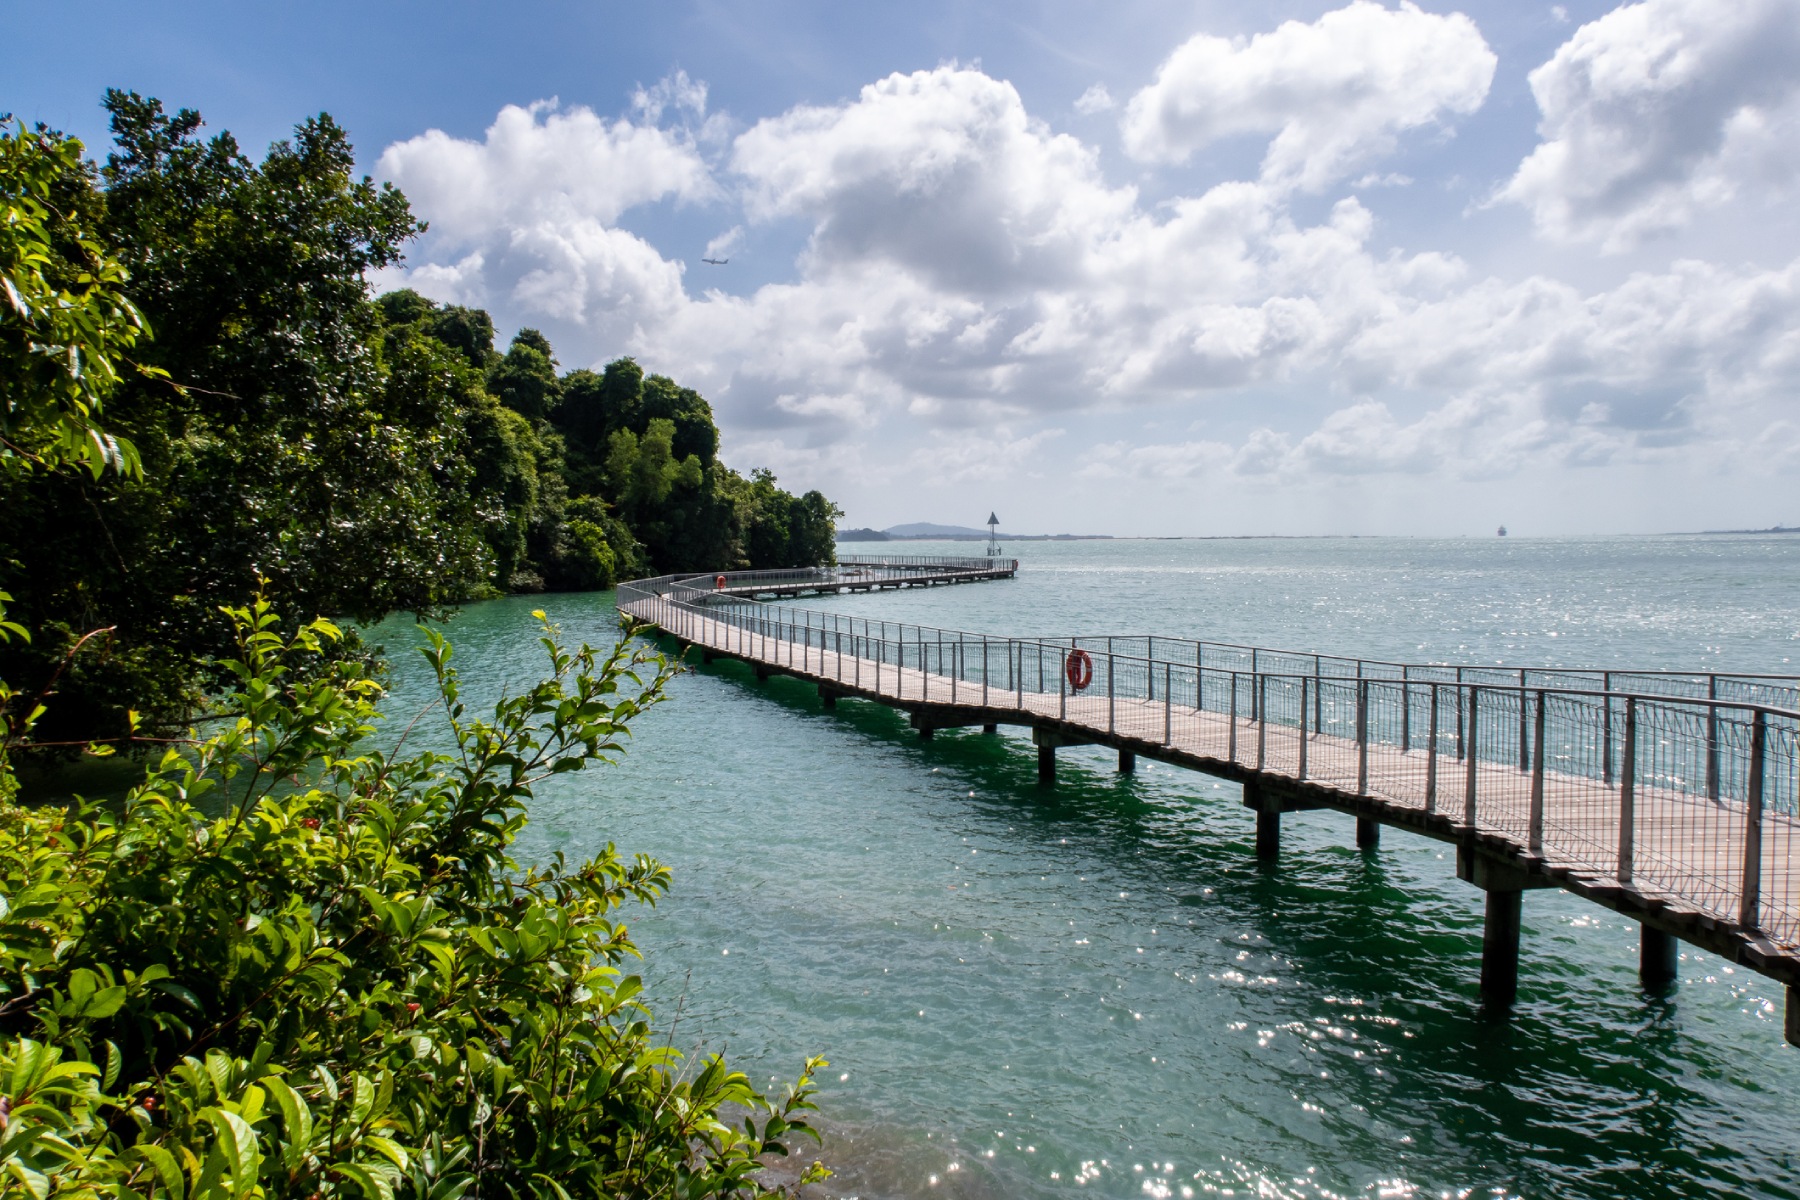 Chek Jawa Broadwalk Jetty, a wooden platform in the mangrove forest wetlands overlooking the sea on Pulau Ubin Island in Singapore